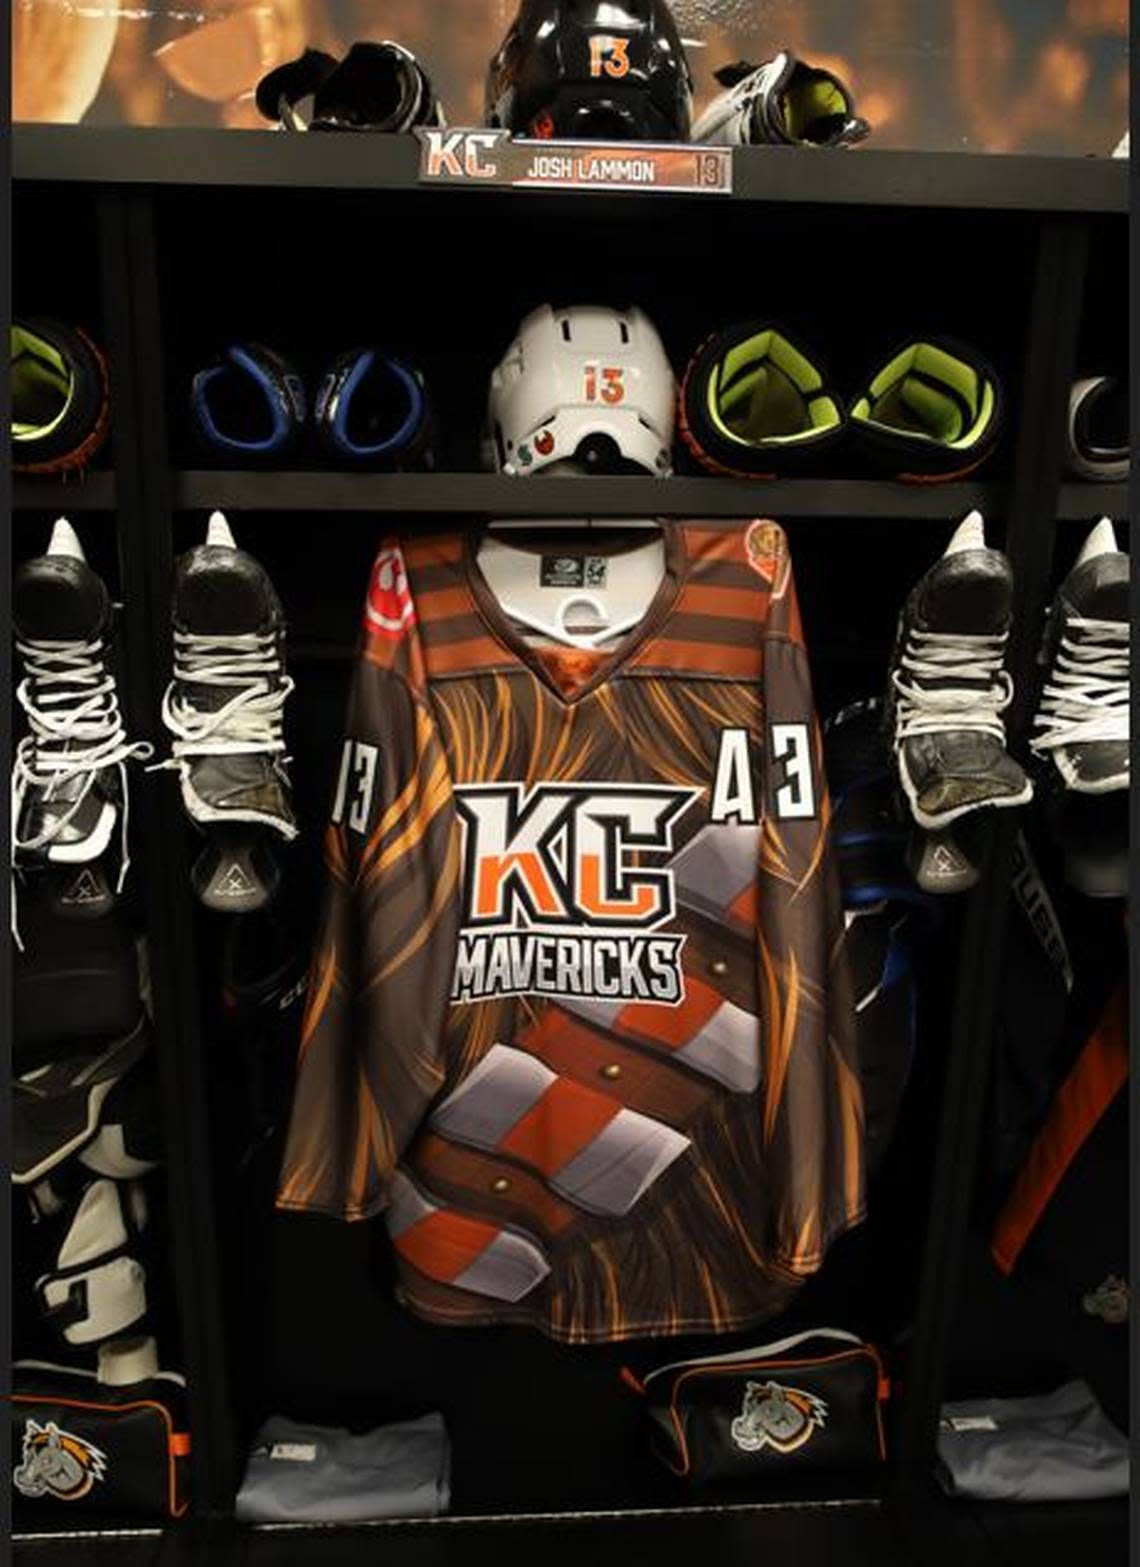 The Chewbacca hockey jerseys.